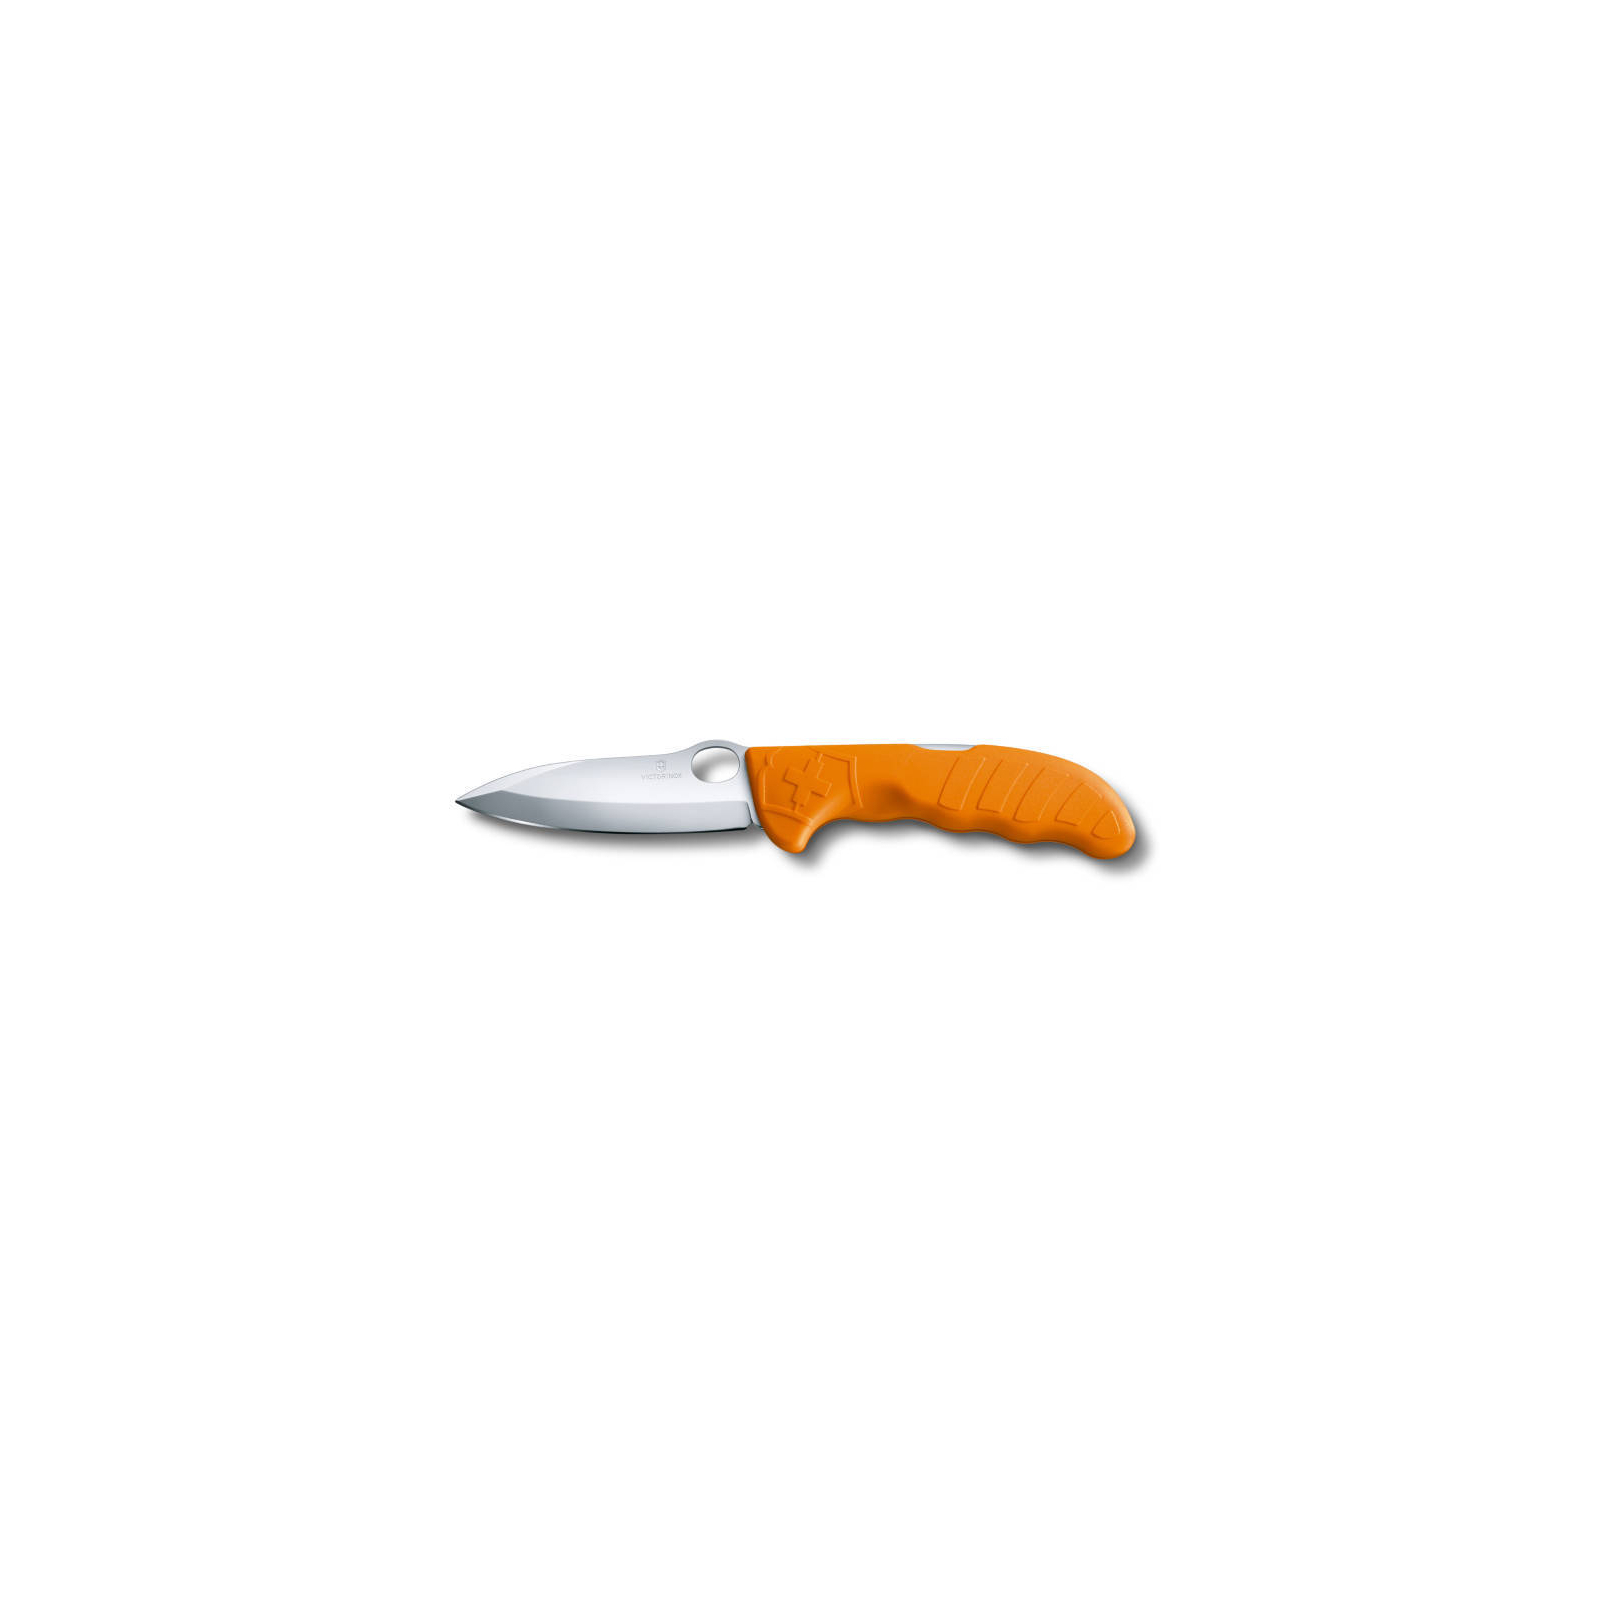 Нож Victorinox Hunter Pro оранжевый с чехлом (0.9410.9)